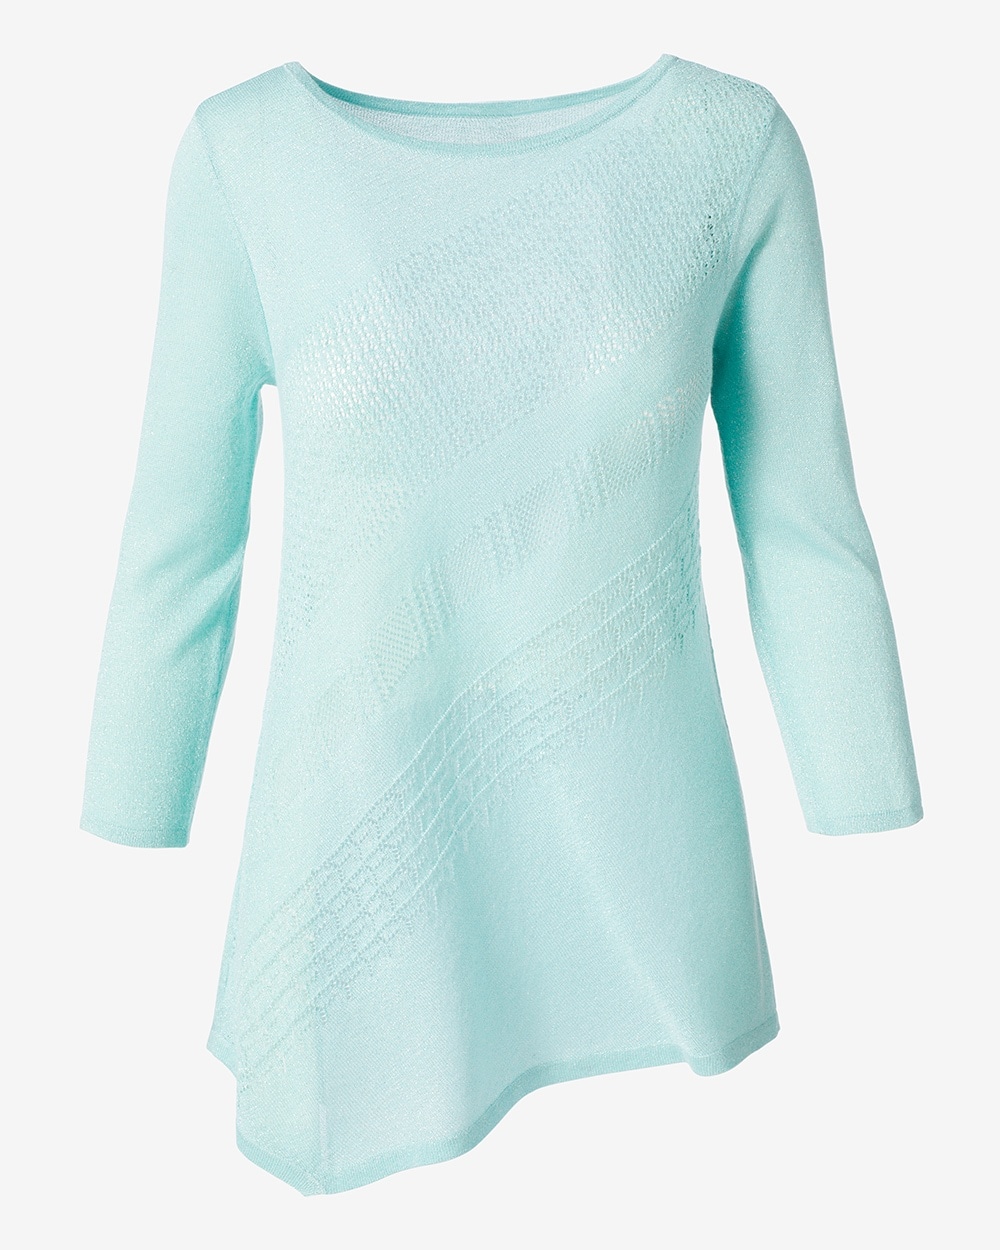 Easywear Asymmetrical Shine Sweater